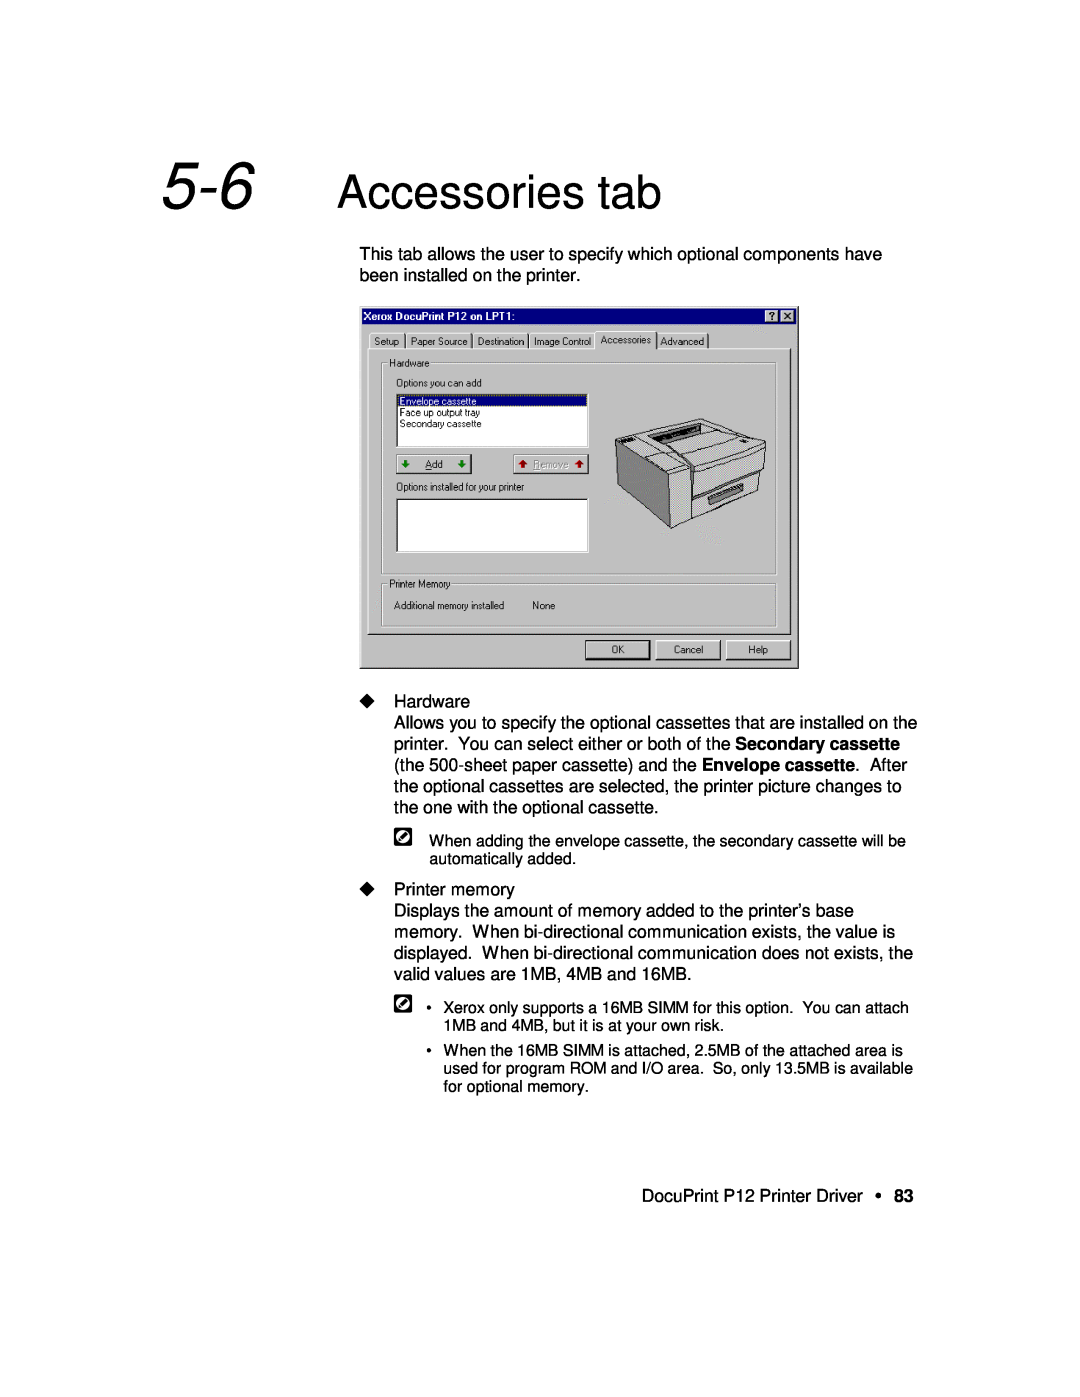 Xerox P12 manual Accessories tab 